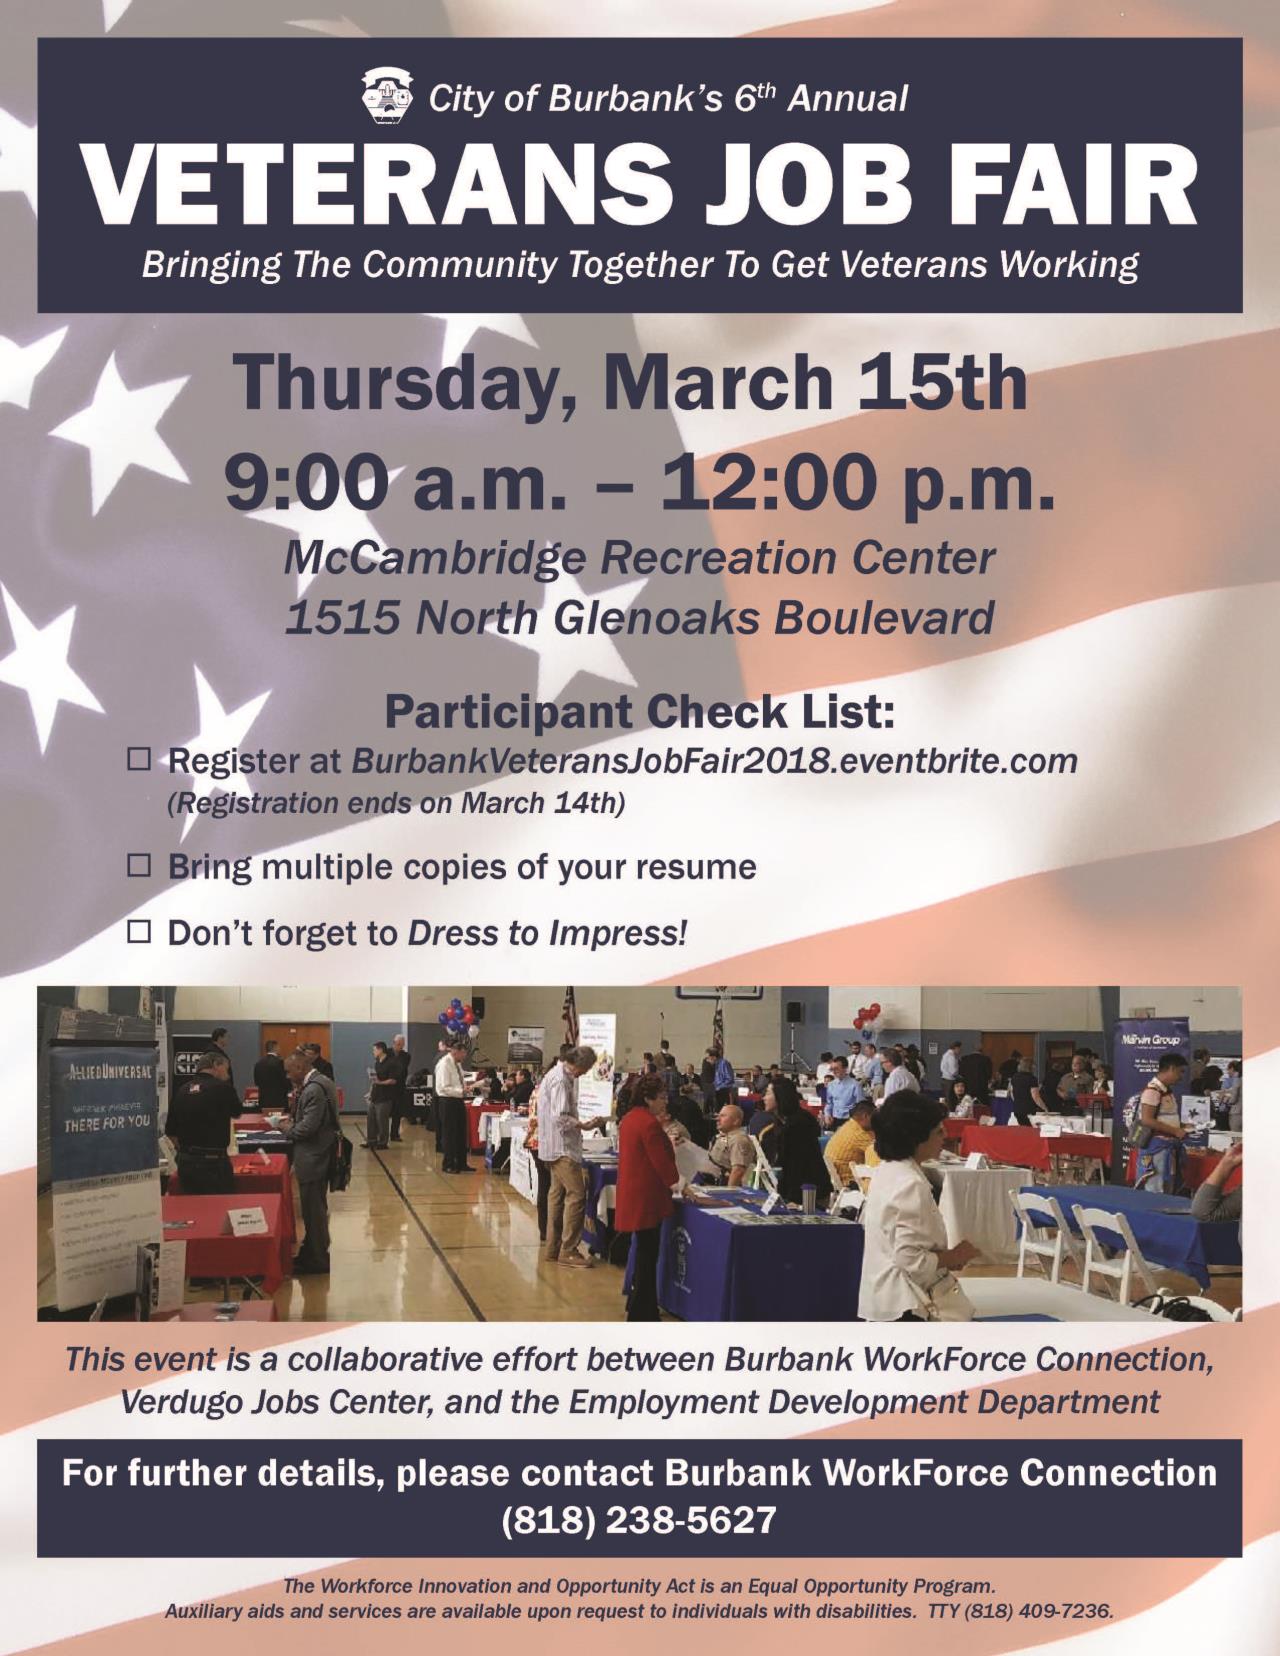 Veterans Job Fair Flyer 2018